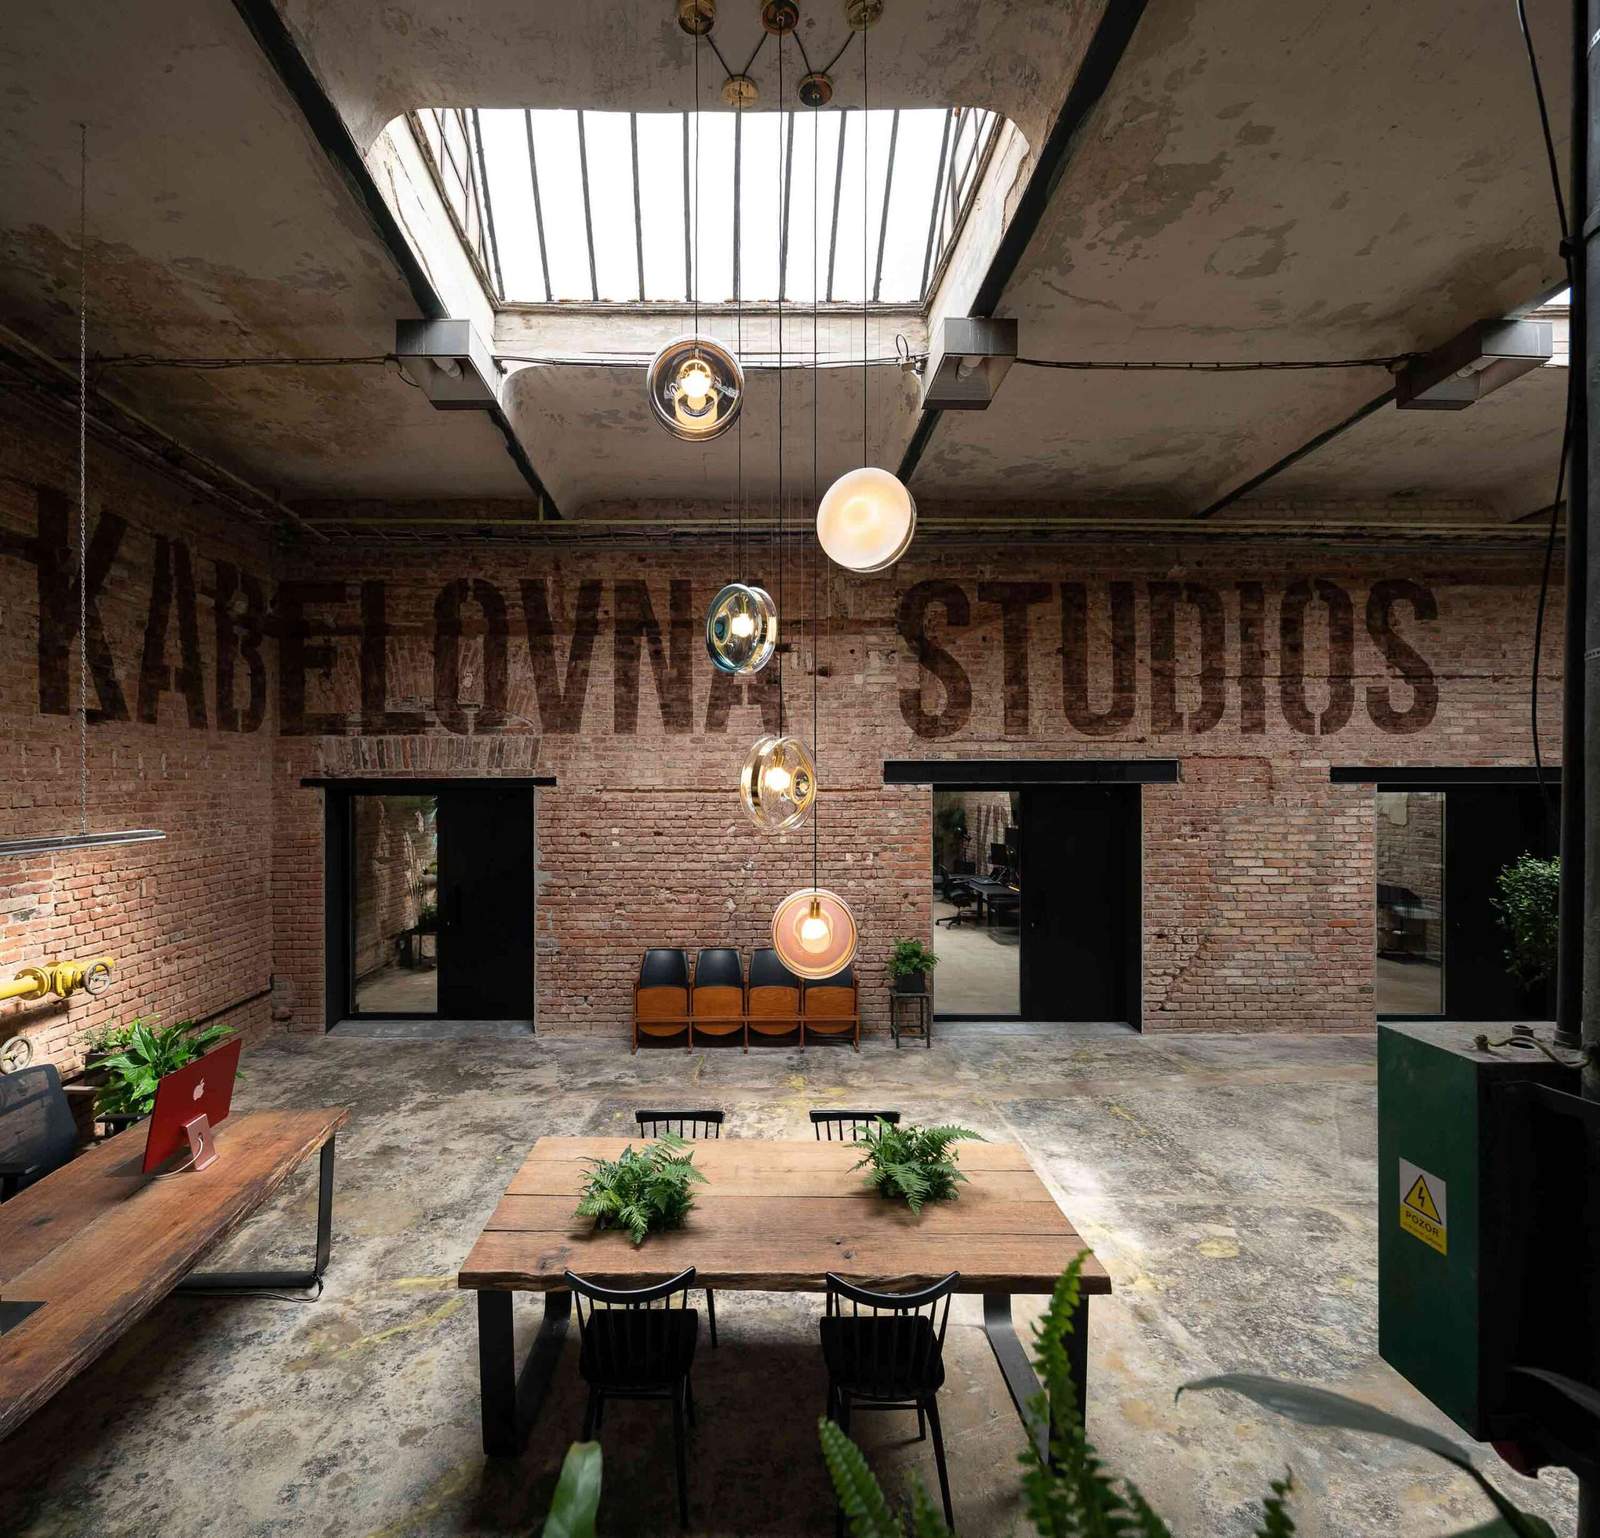 Kabelovna Studios by B² Architecture